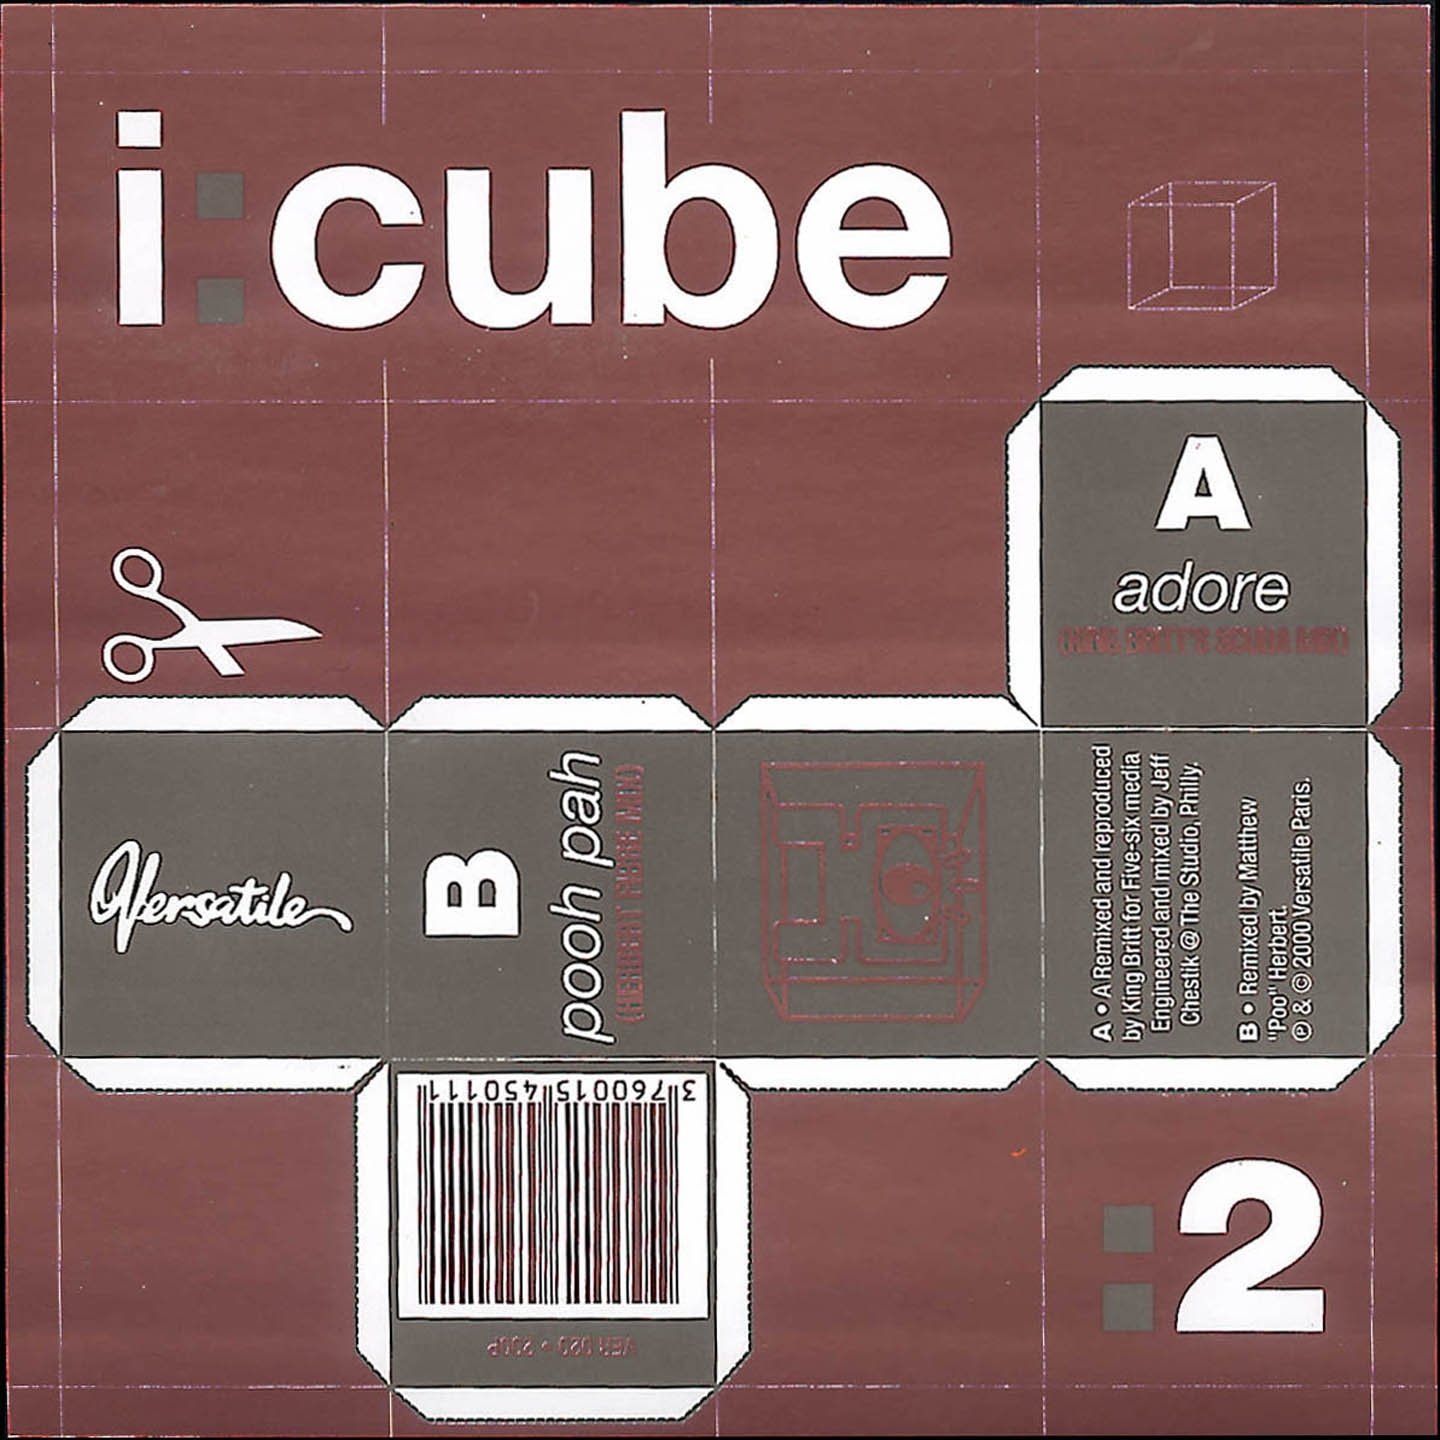 Cube remix. Альбом adore обложка. Альбомы с кубом на обложке. I Cube. Дизайн альбома куб.